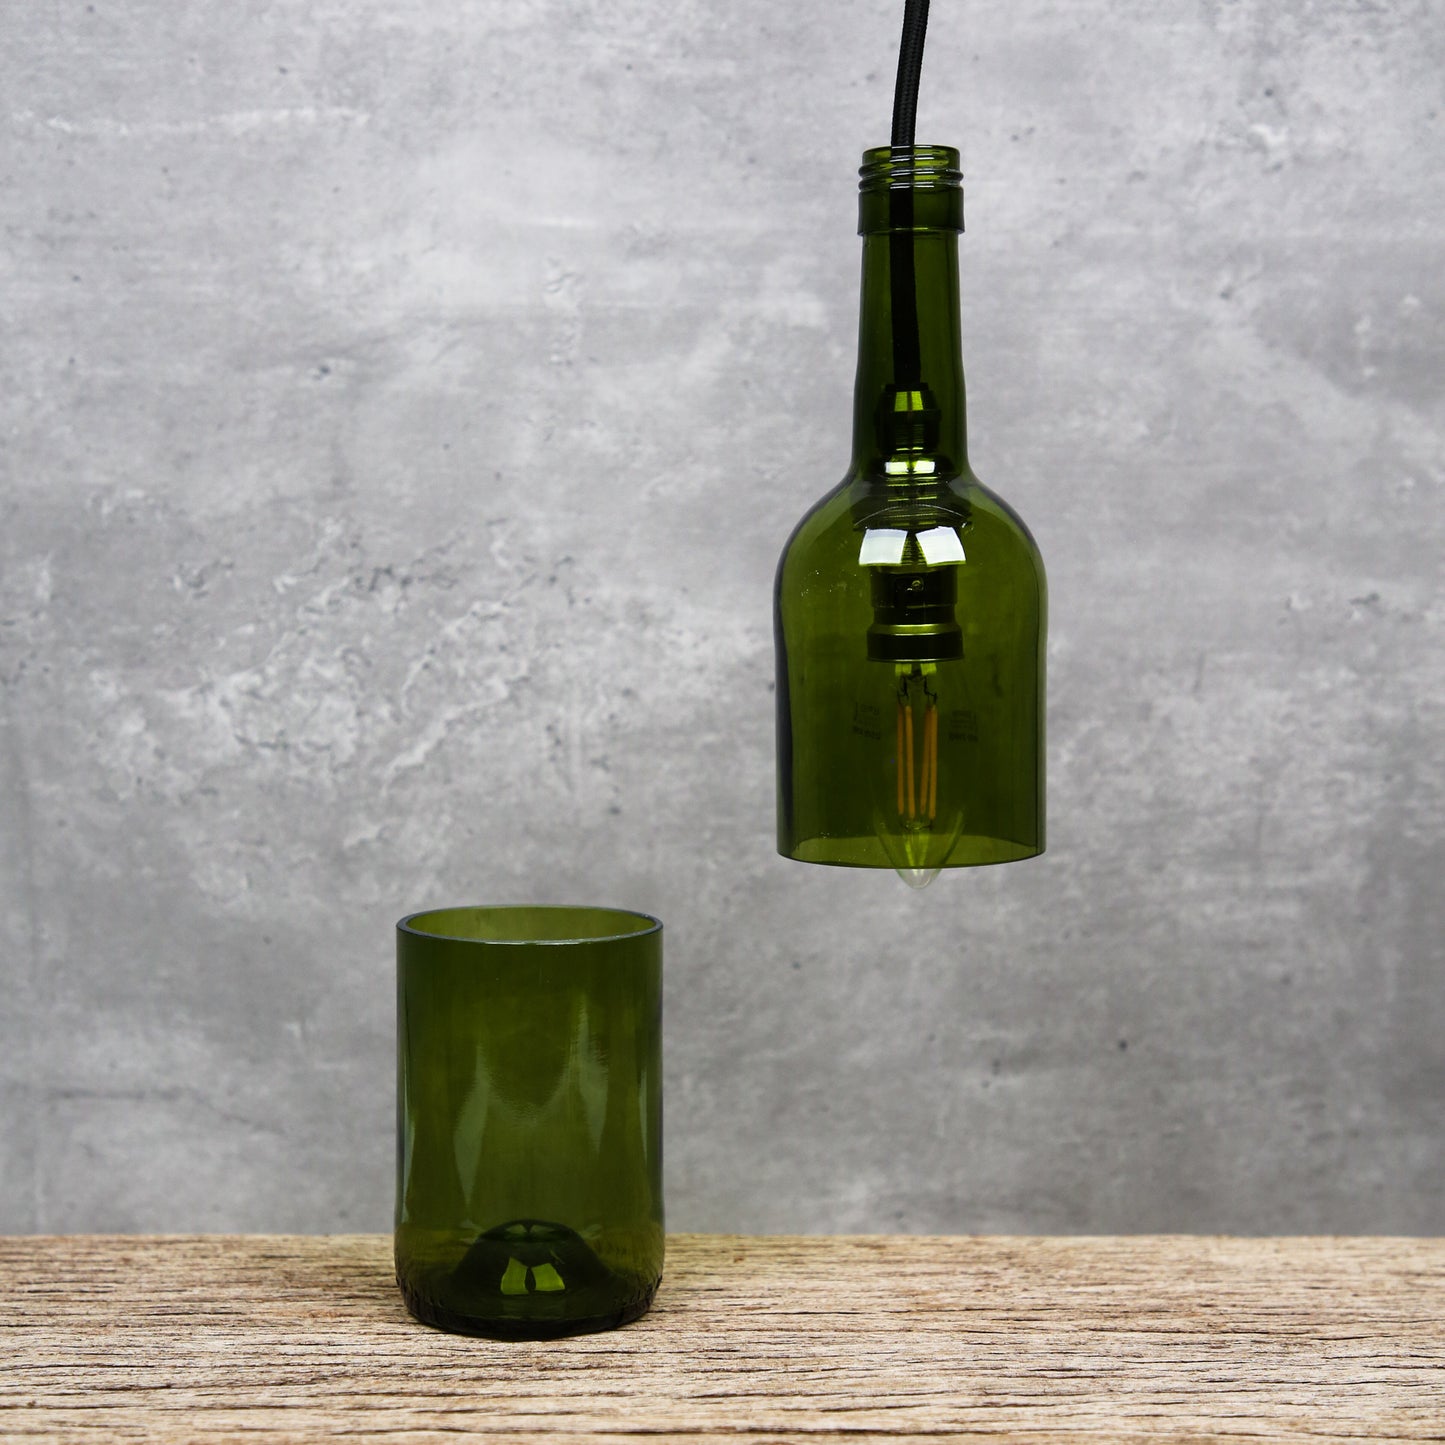 Upcycled Olive Lamp / Lighting.